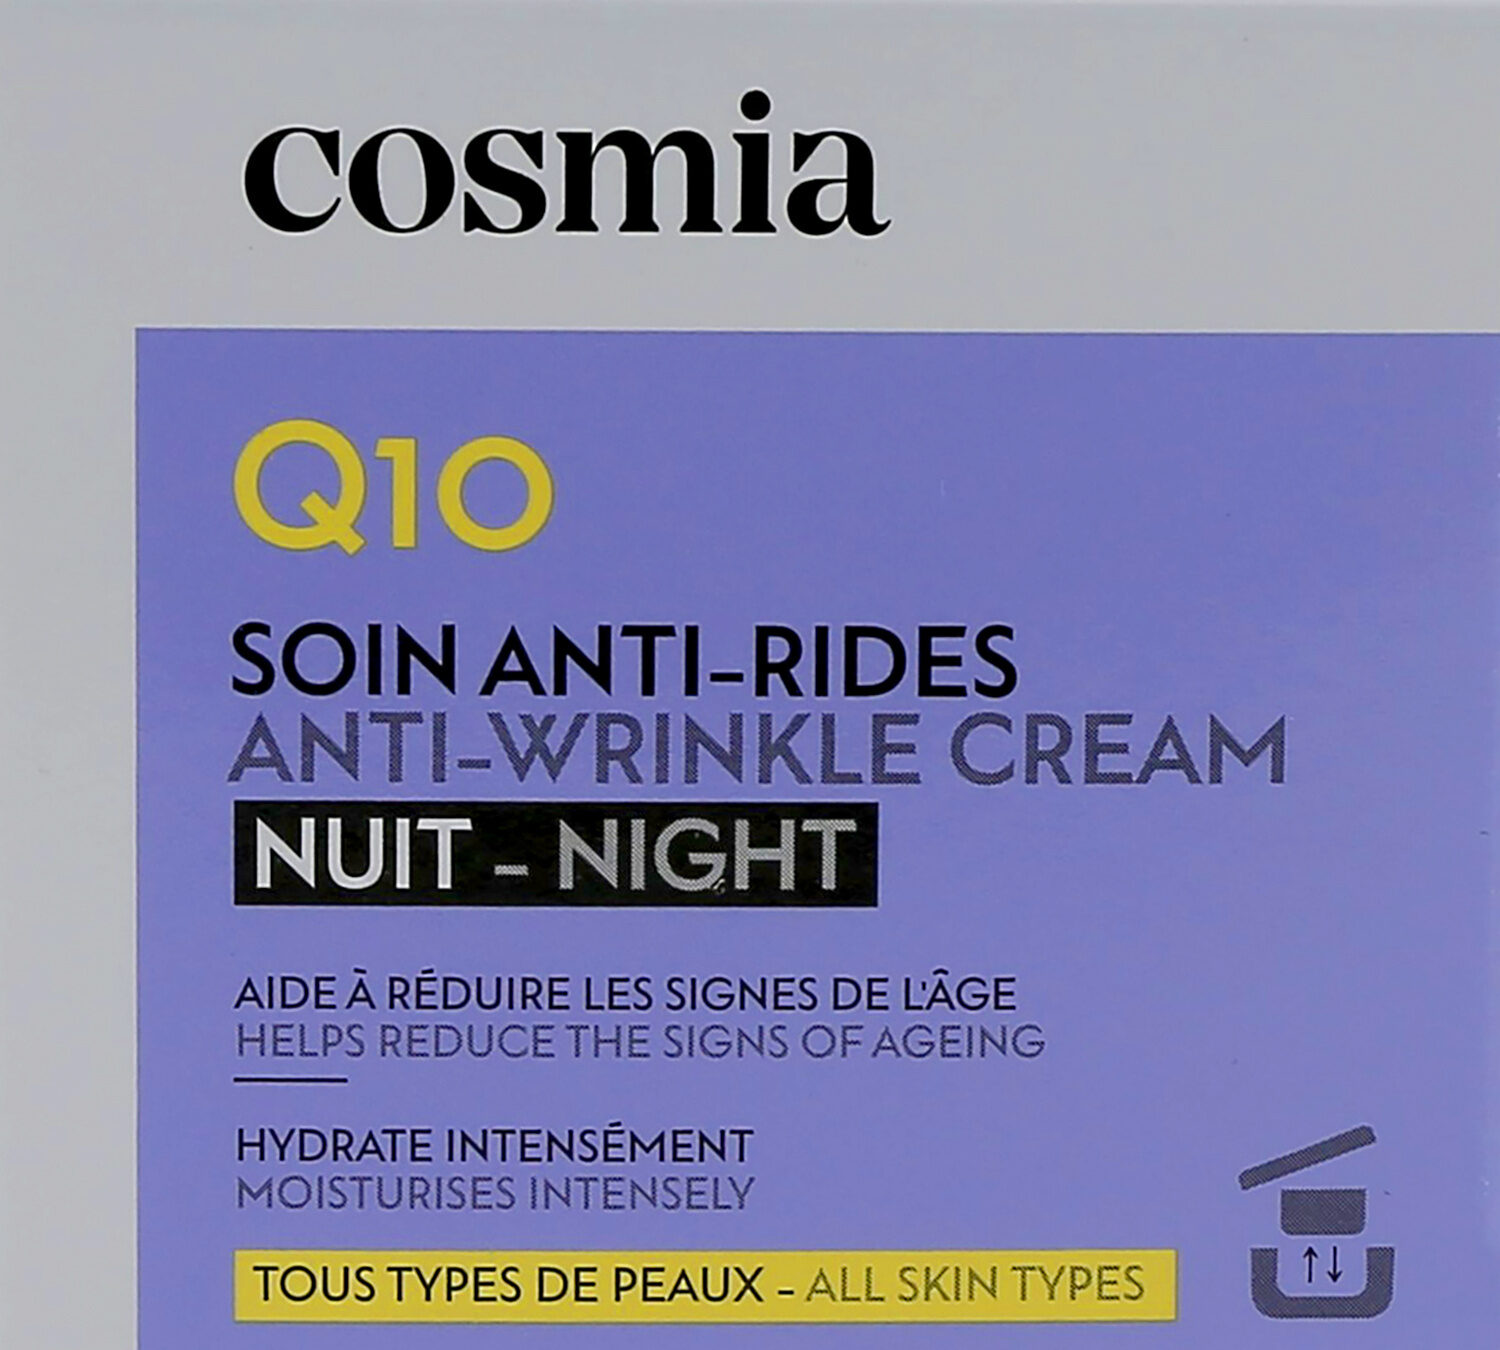 Cosmia creme nuit - anti ride - q10 50ml - Produit - fr